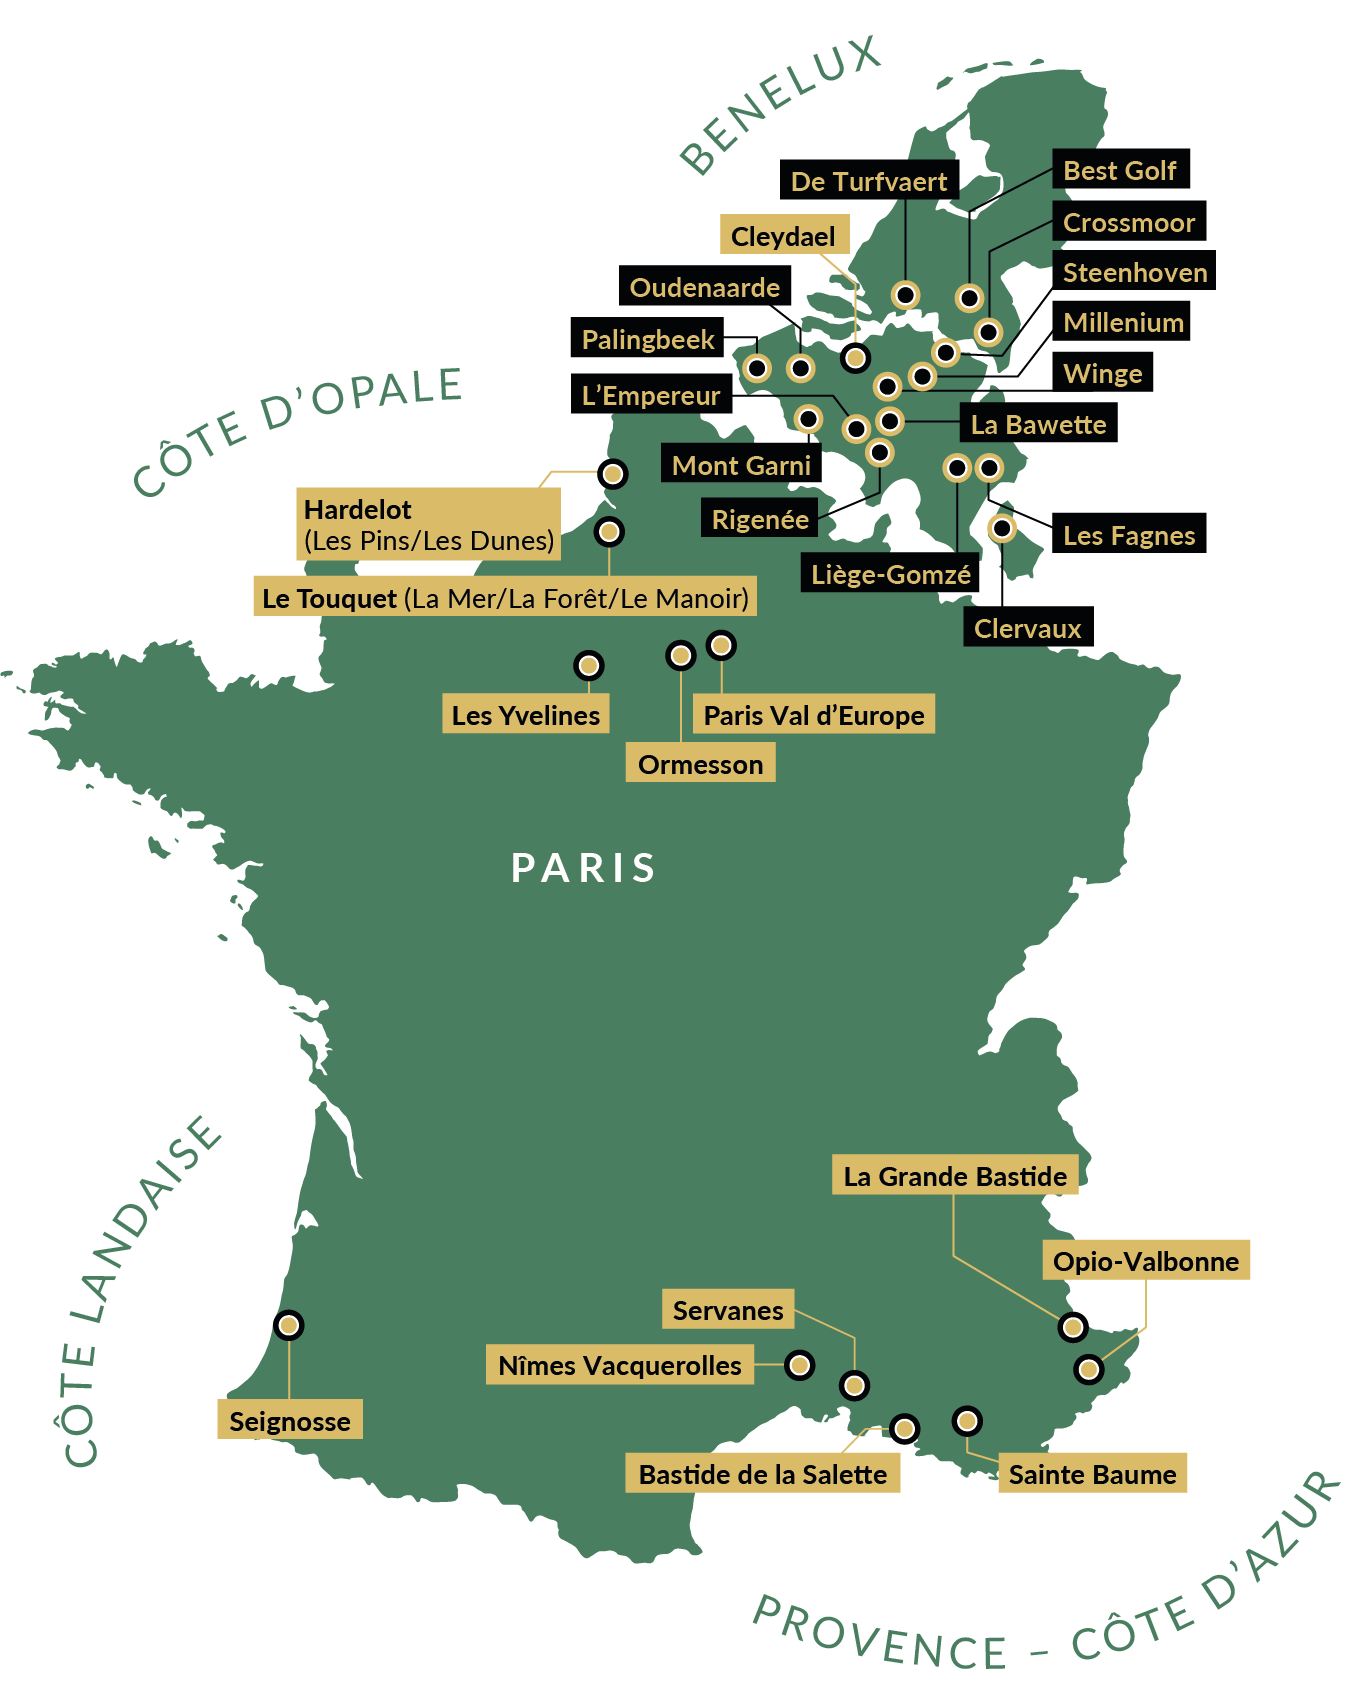 OPEN GOLF CLUB propose des golfs en France et en Europe